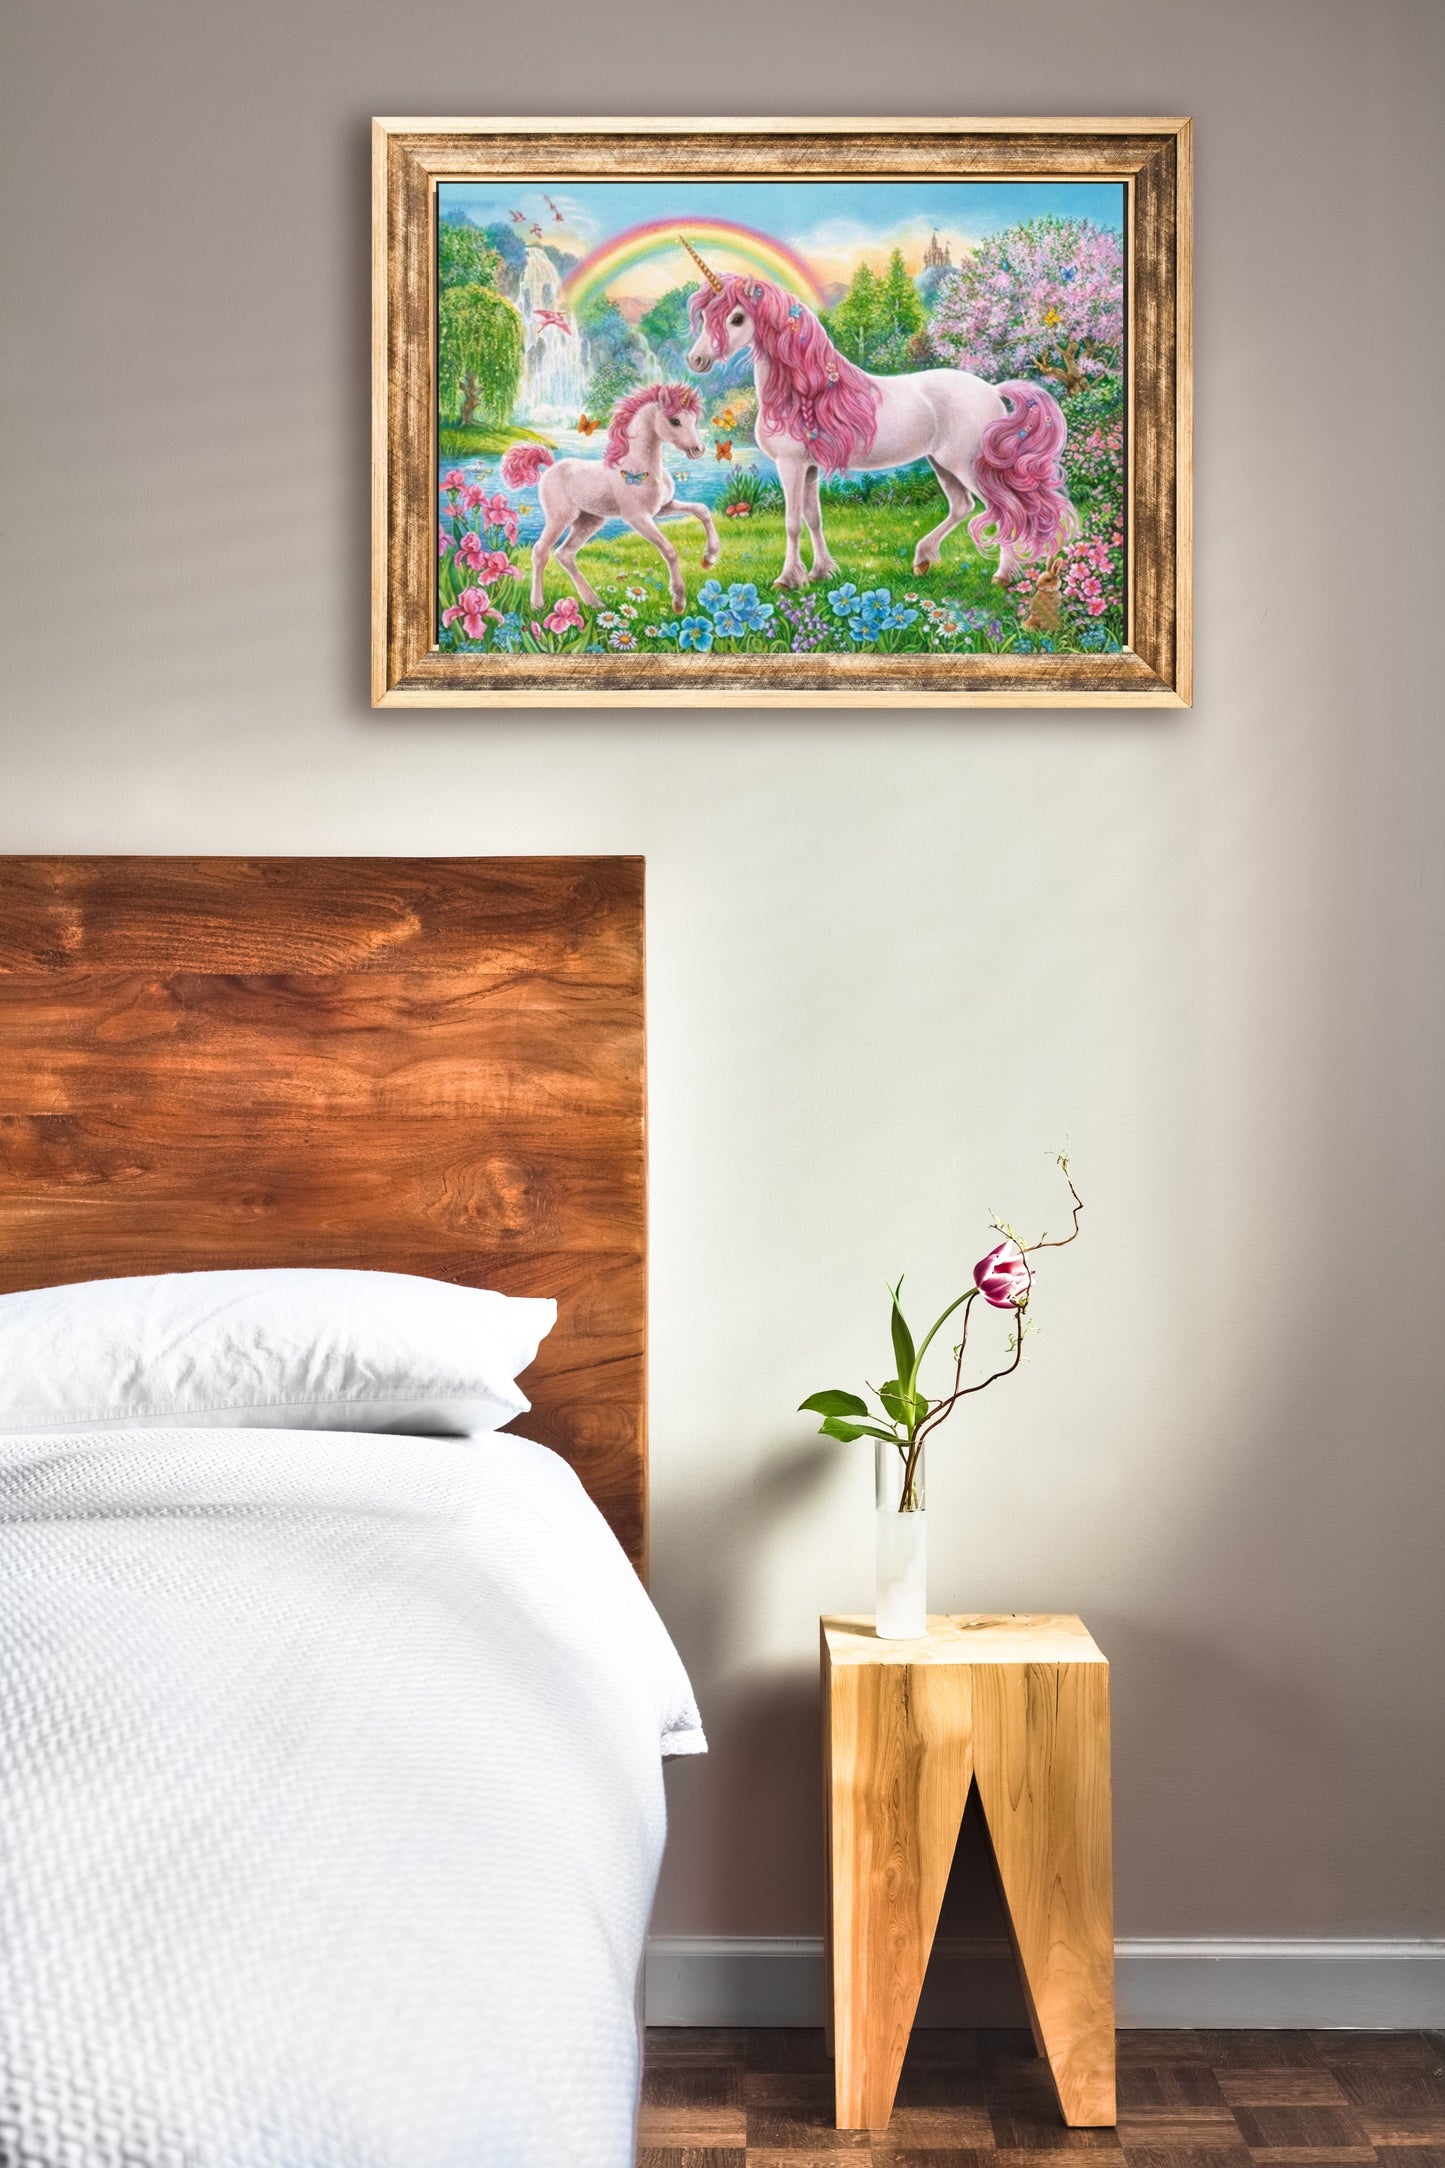 Malen nach Zahlen Erwachsene Einhorn 40x50 cm Paint by Numbers DIY Öl Acryl Leinwand Bild Dekoration Unicorn Rainbow ohne Rahmen 1 Stück